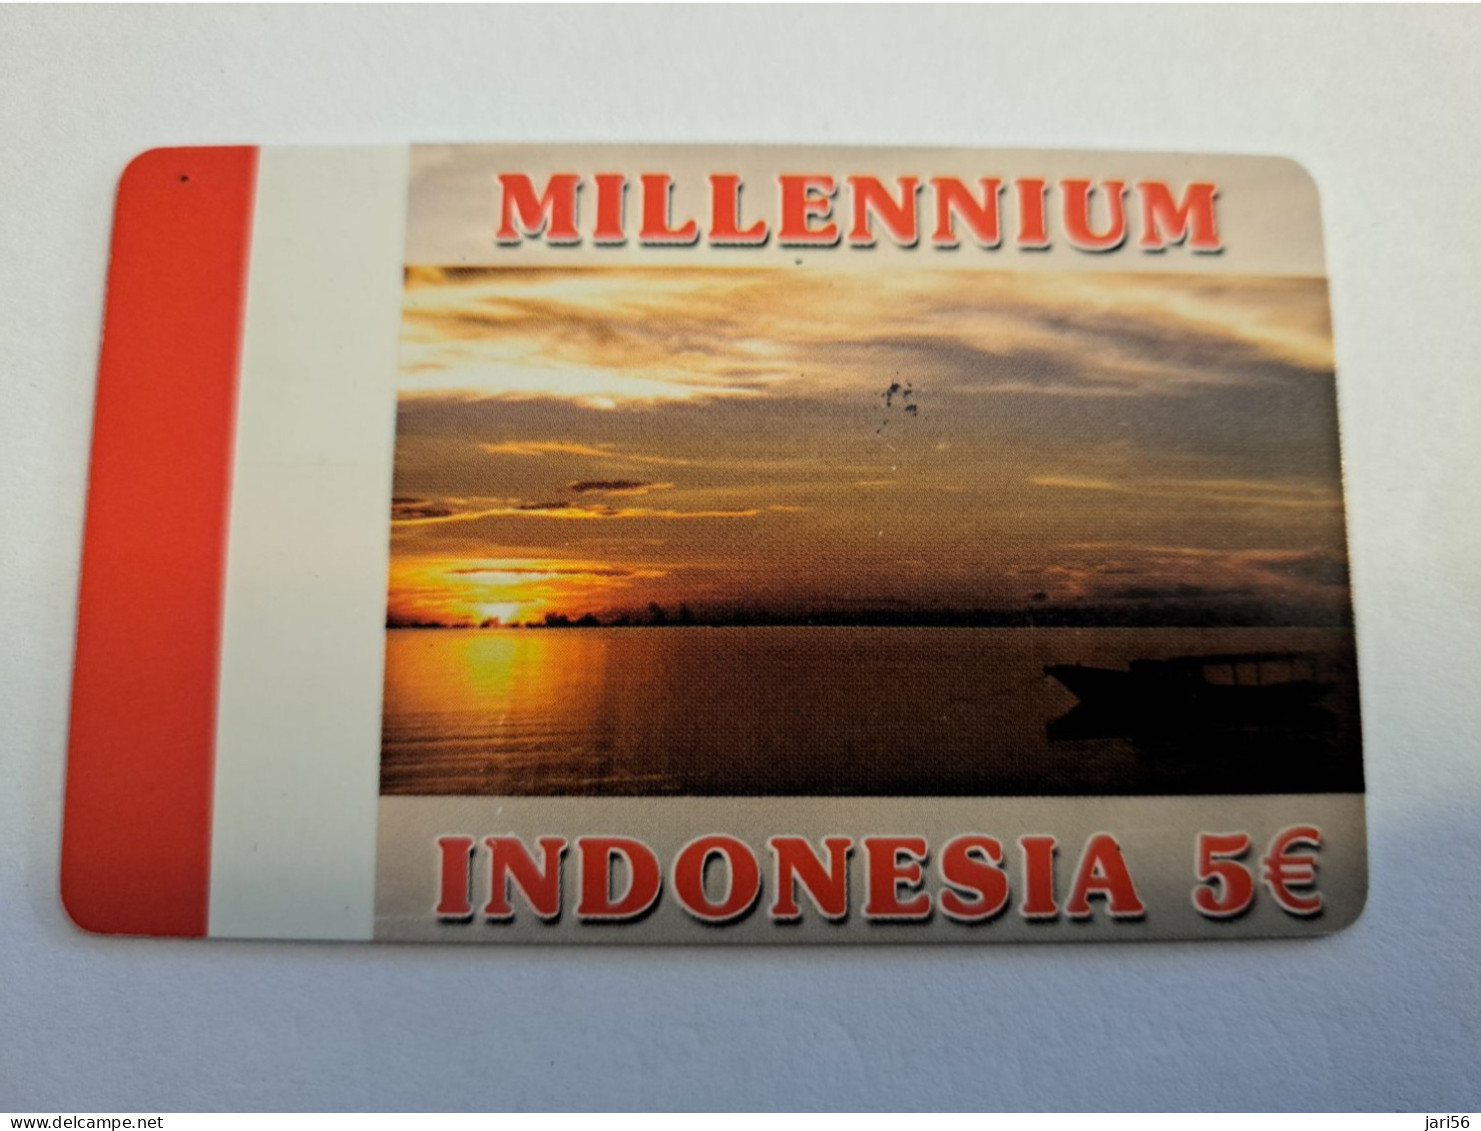 GRIEKENLAND/GREECE / €5,- PREPAID CARD/ INDONESIA / MILLENIUM / BOAT     Fine Used Card  **16217 ** - Greece